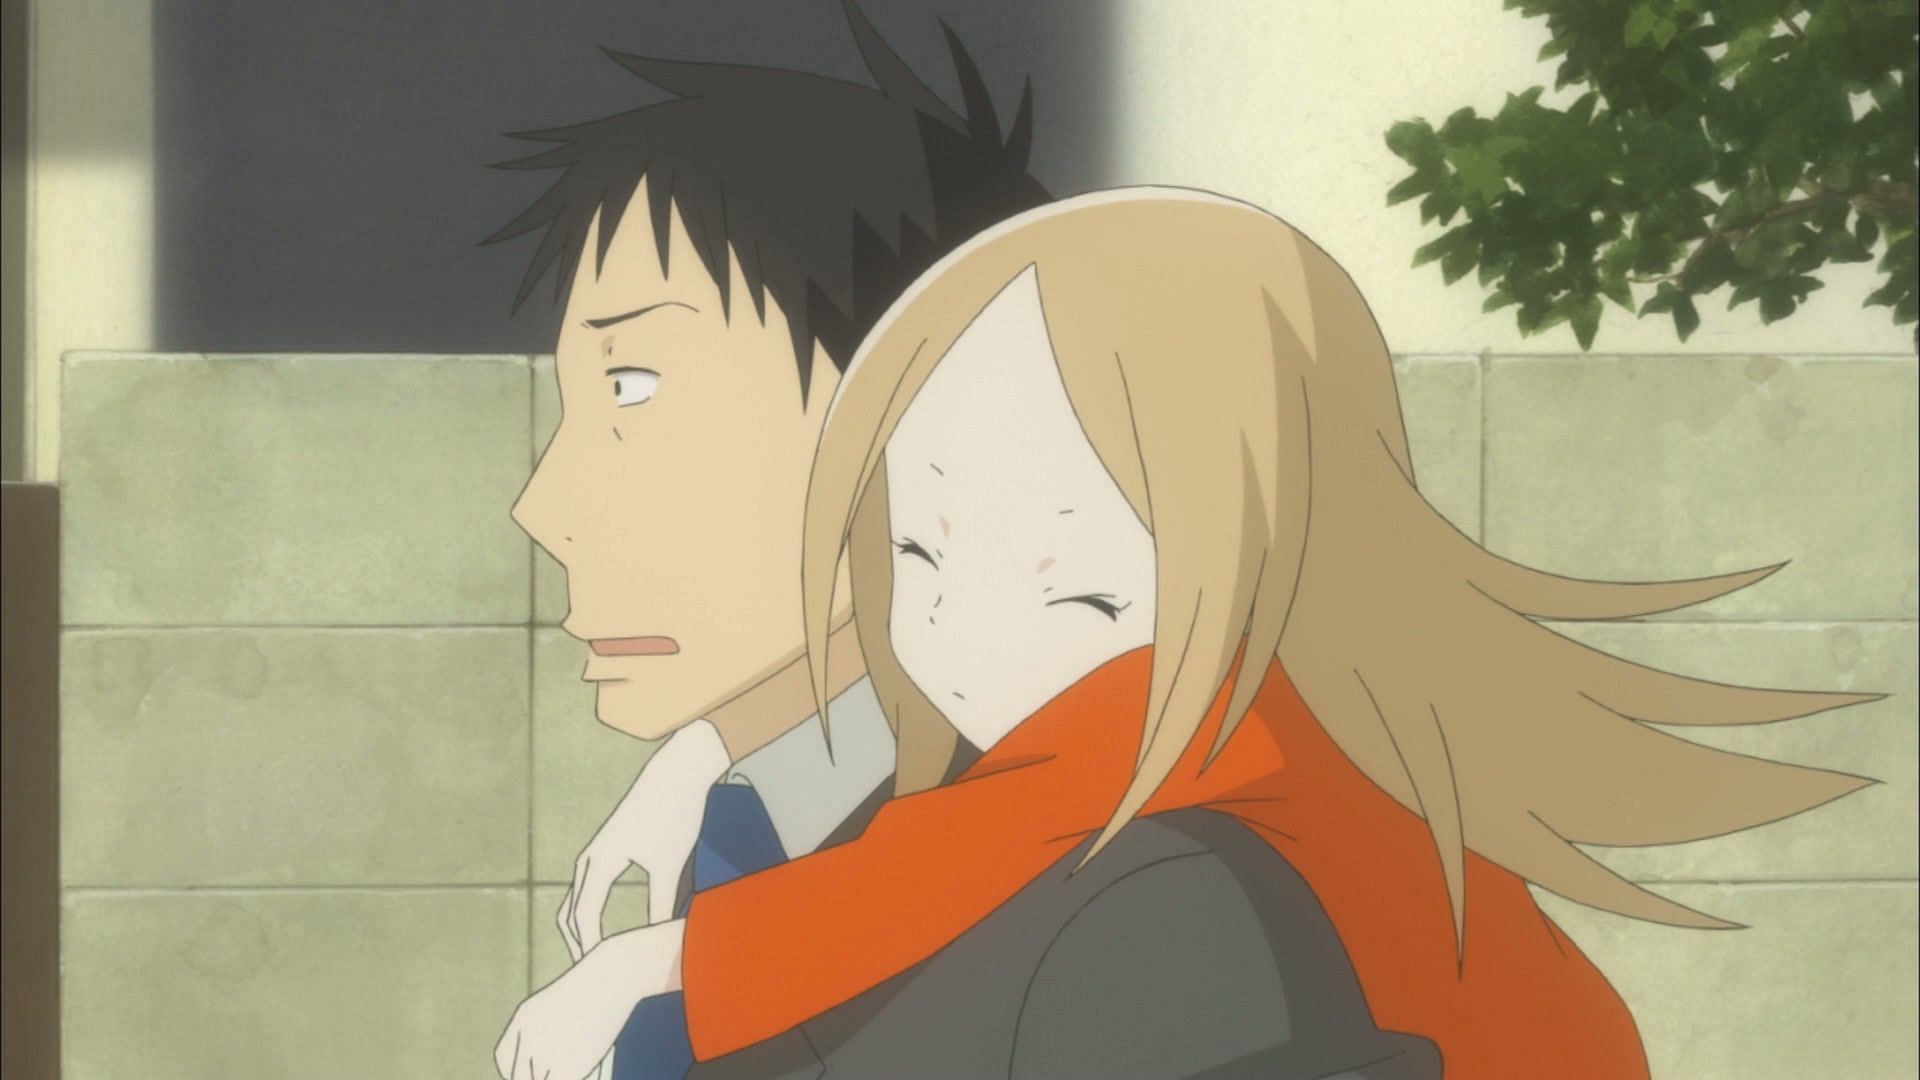 Rin and Daikichi as shown in the anime (Image via Usagi Drop)